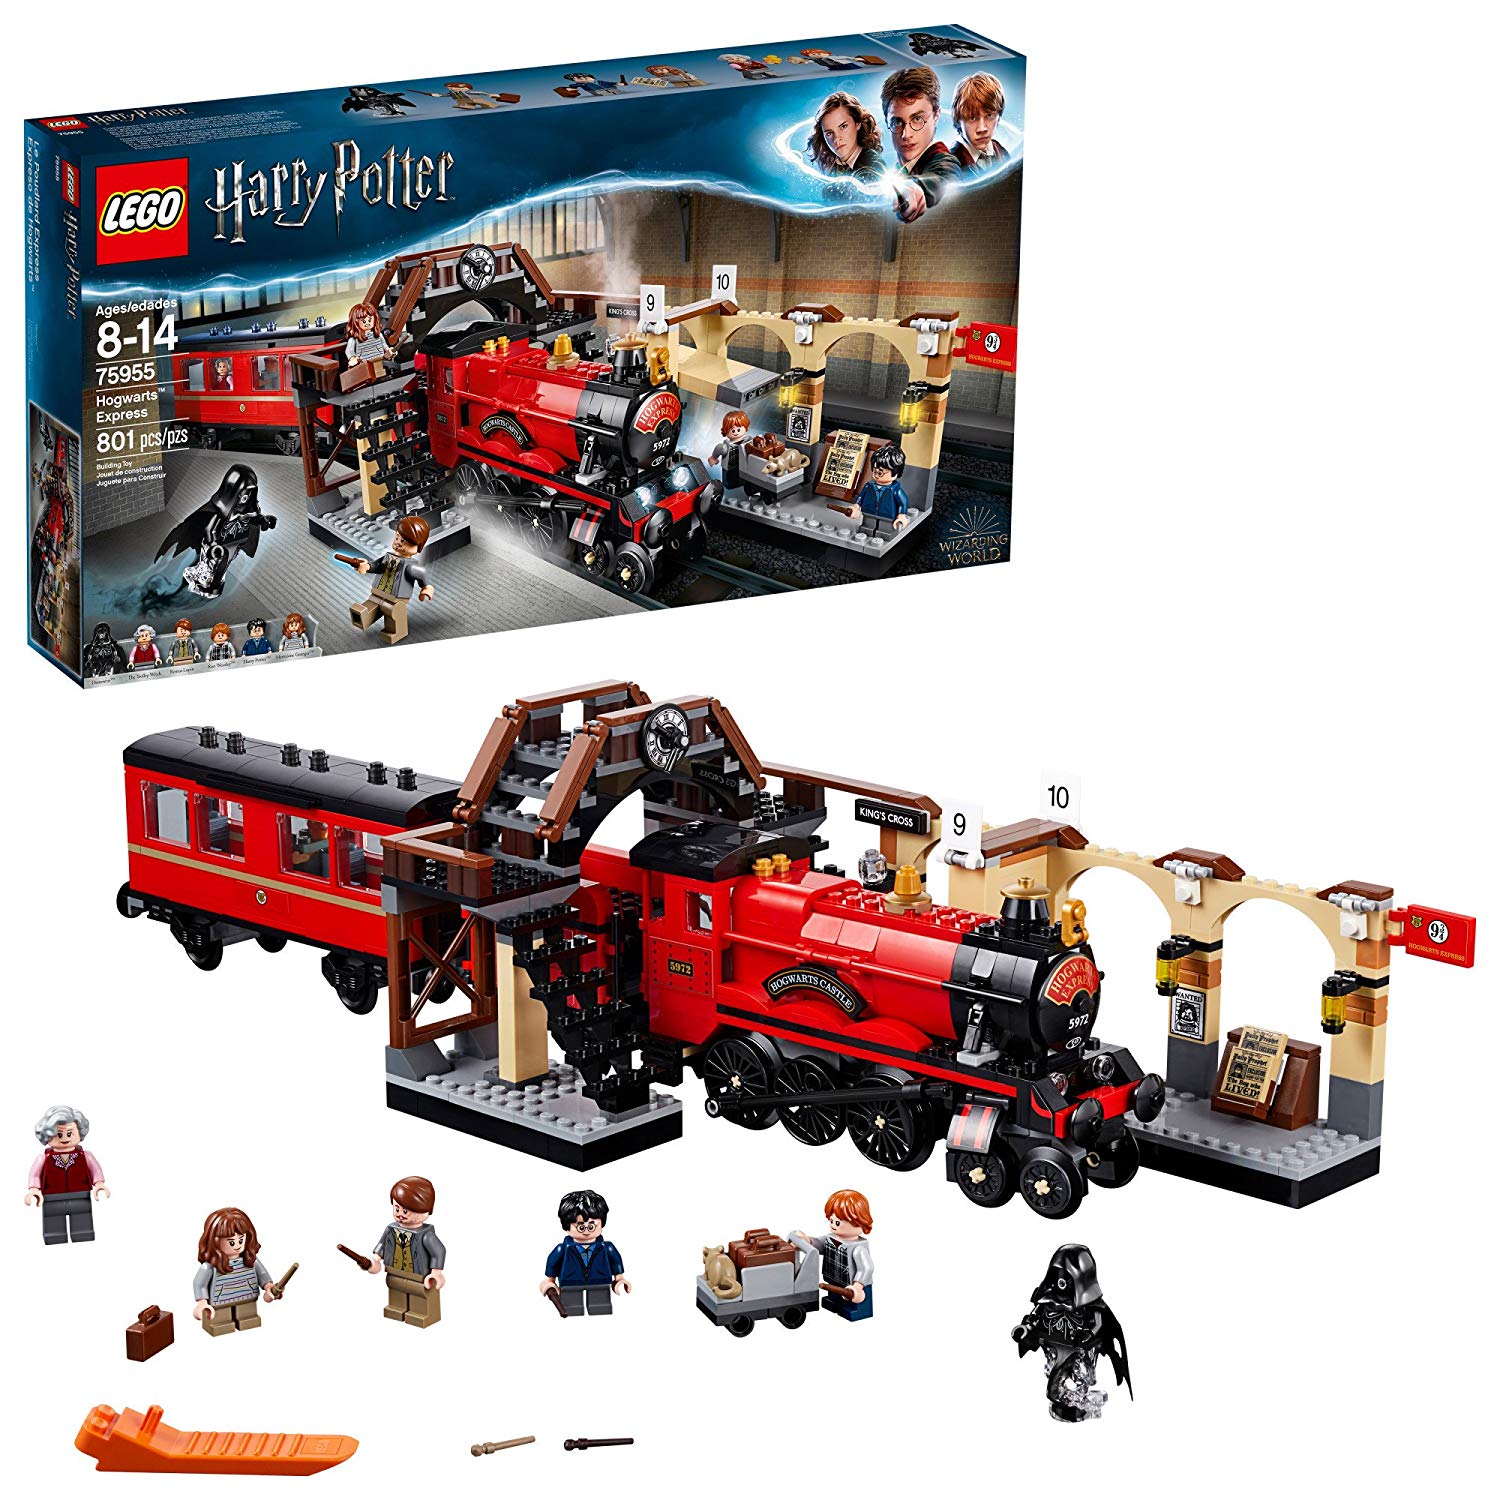 Lego Harry Potter 75955 Hogwarts Express 801 Pieces